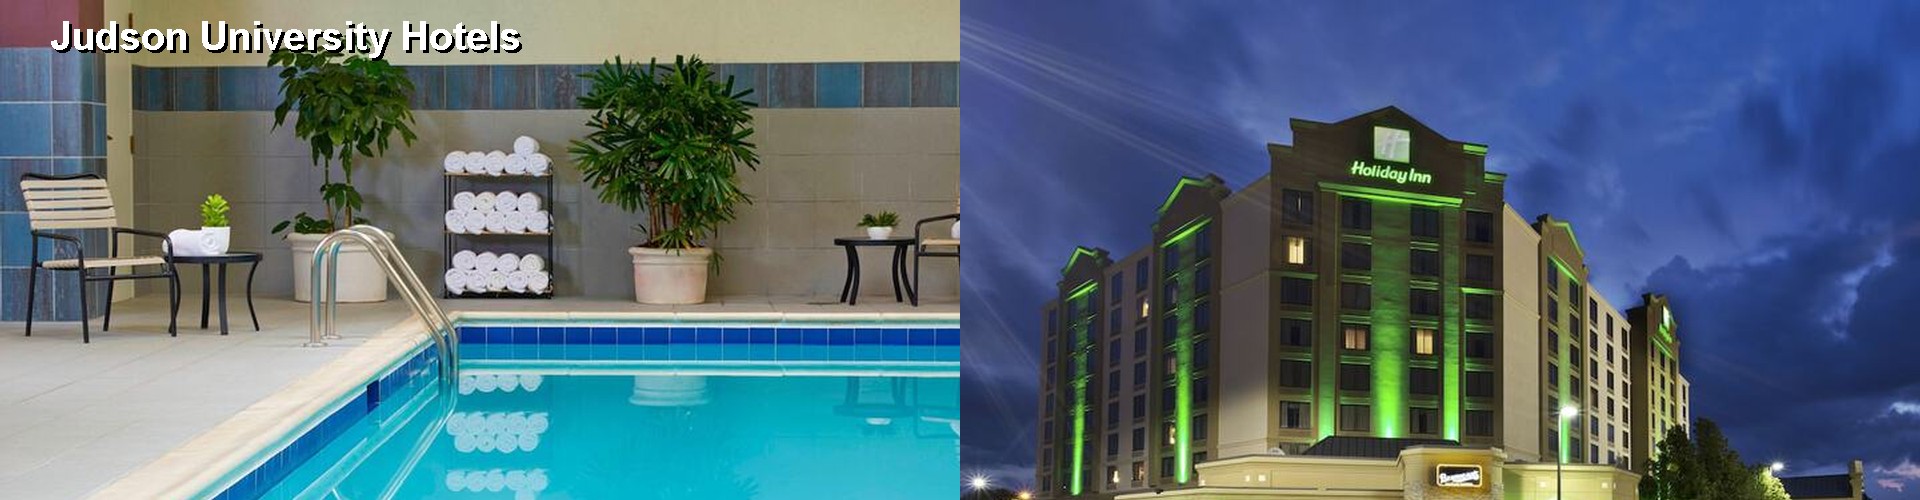 1 Best Hotels near Judson University